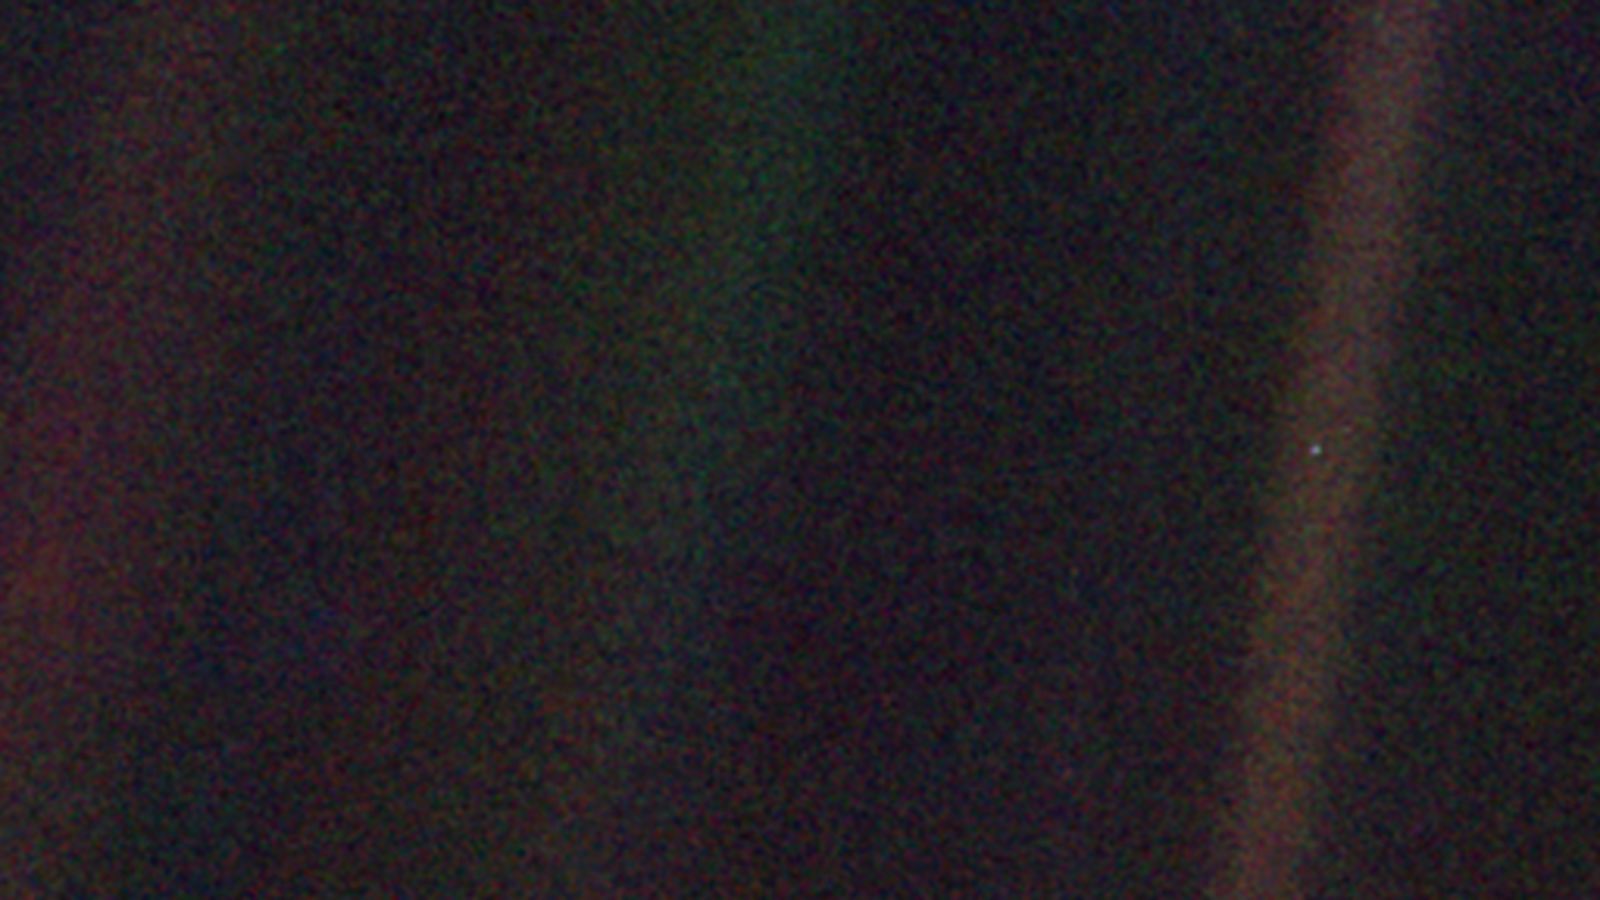 Carl Sagan And His Famous Pale Blue Dot Speech